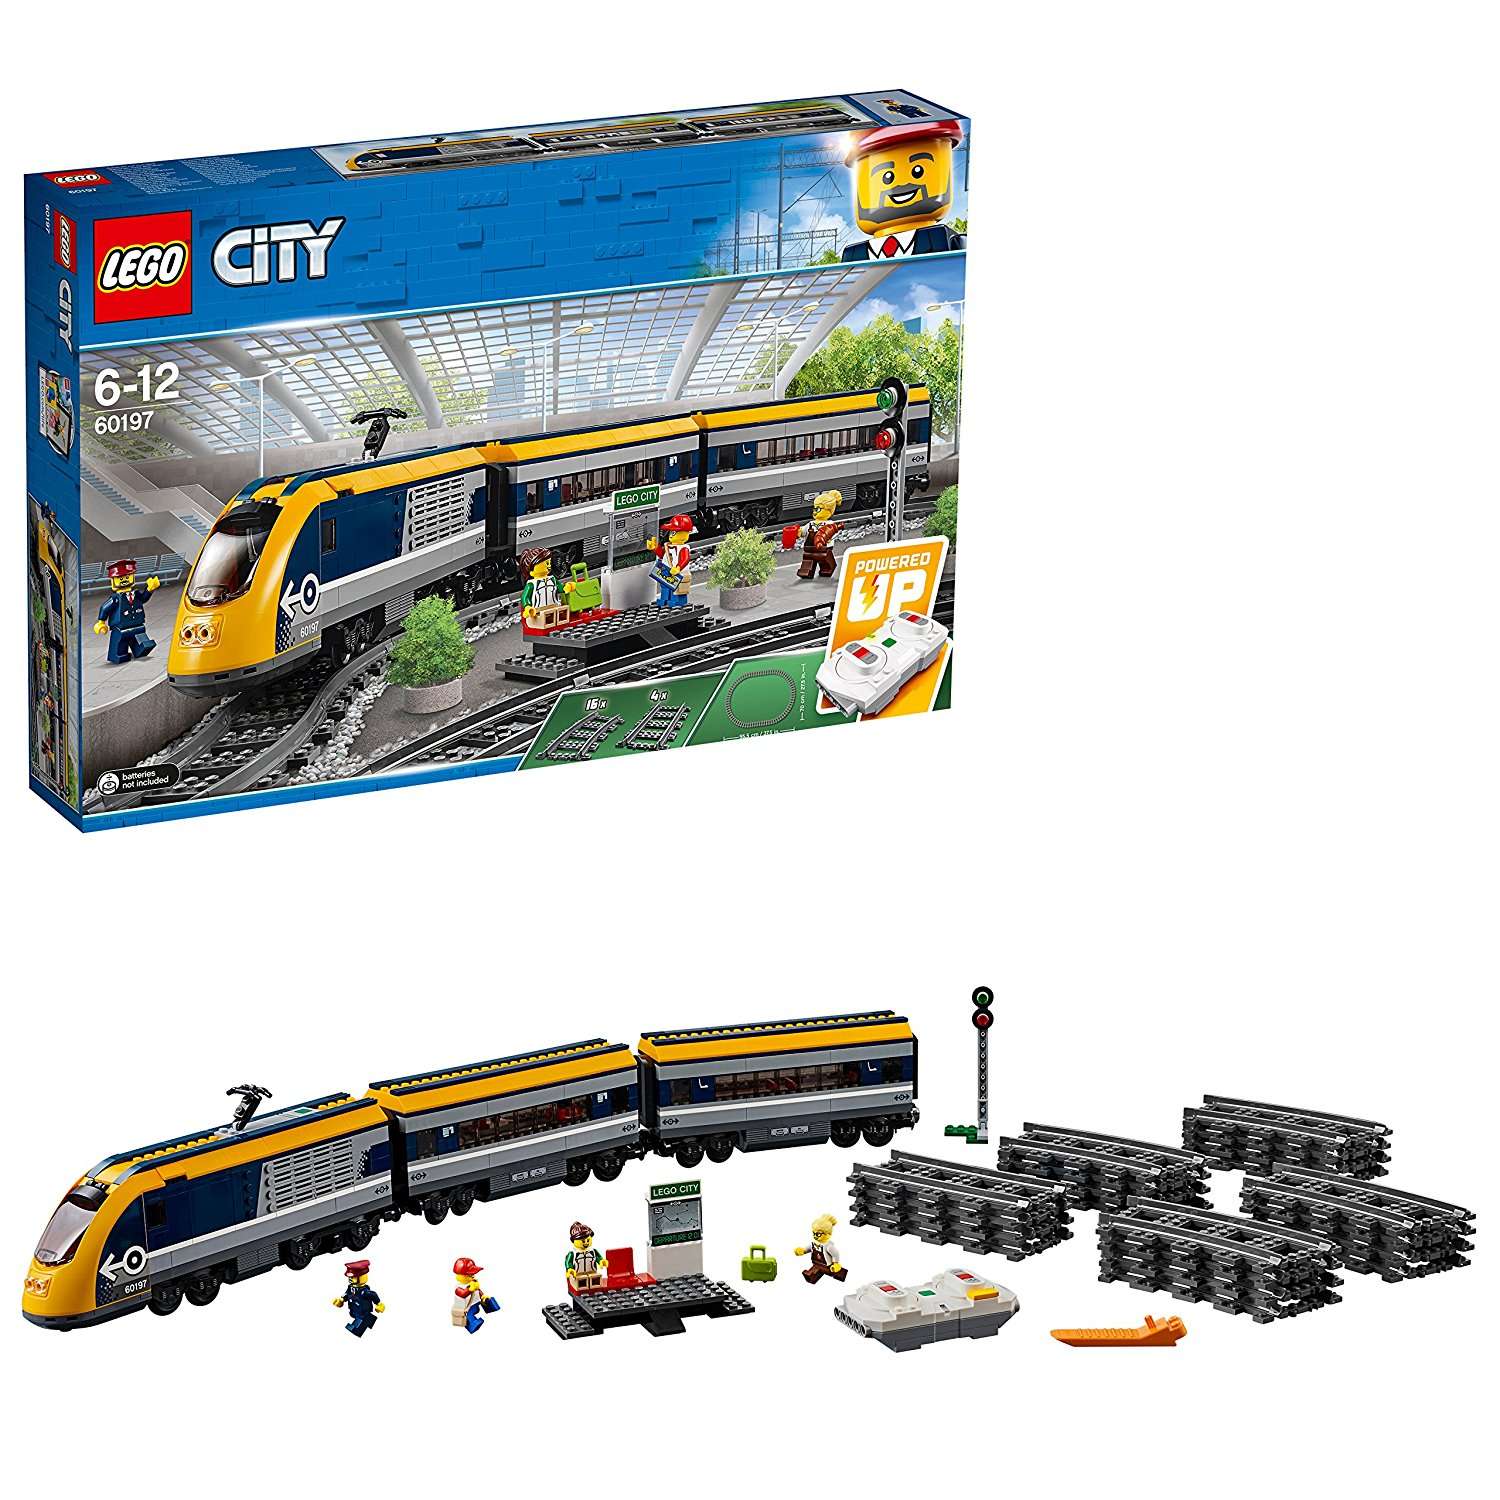 60197 Lego City - Treno passeggeri. - Mago Biribago Giocattoli